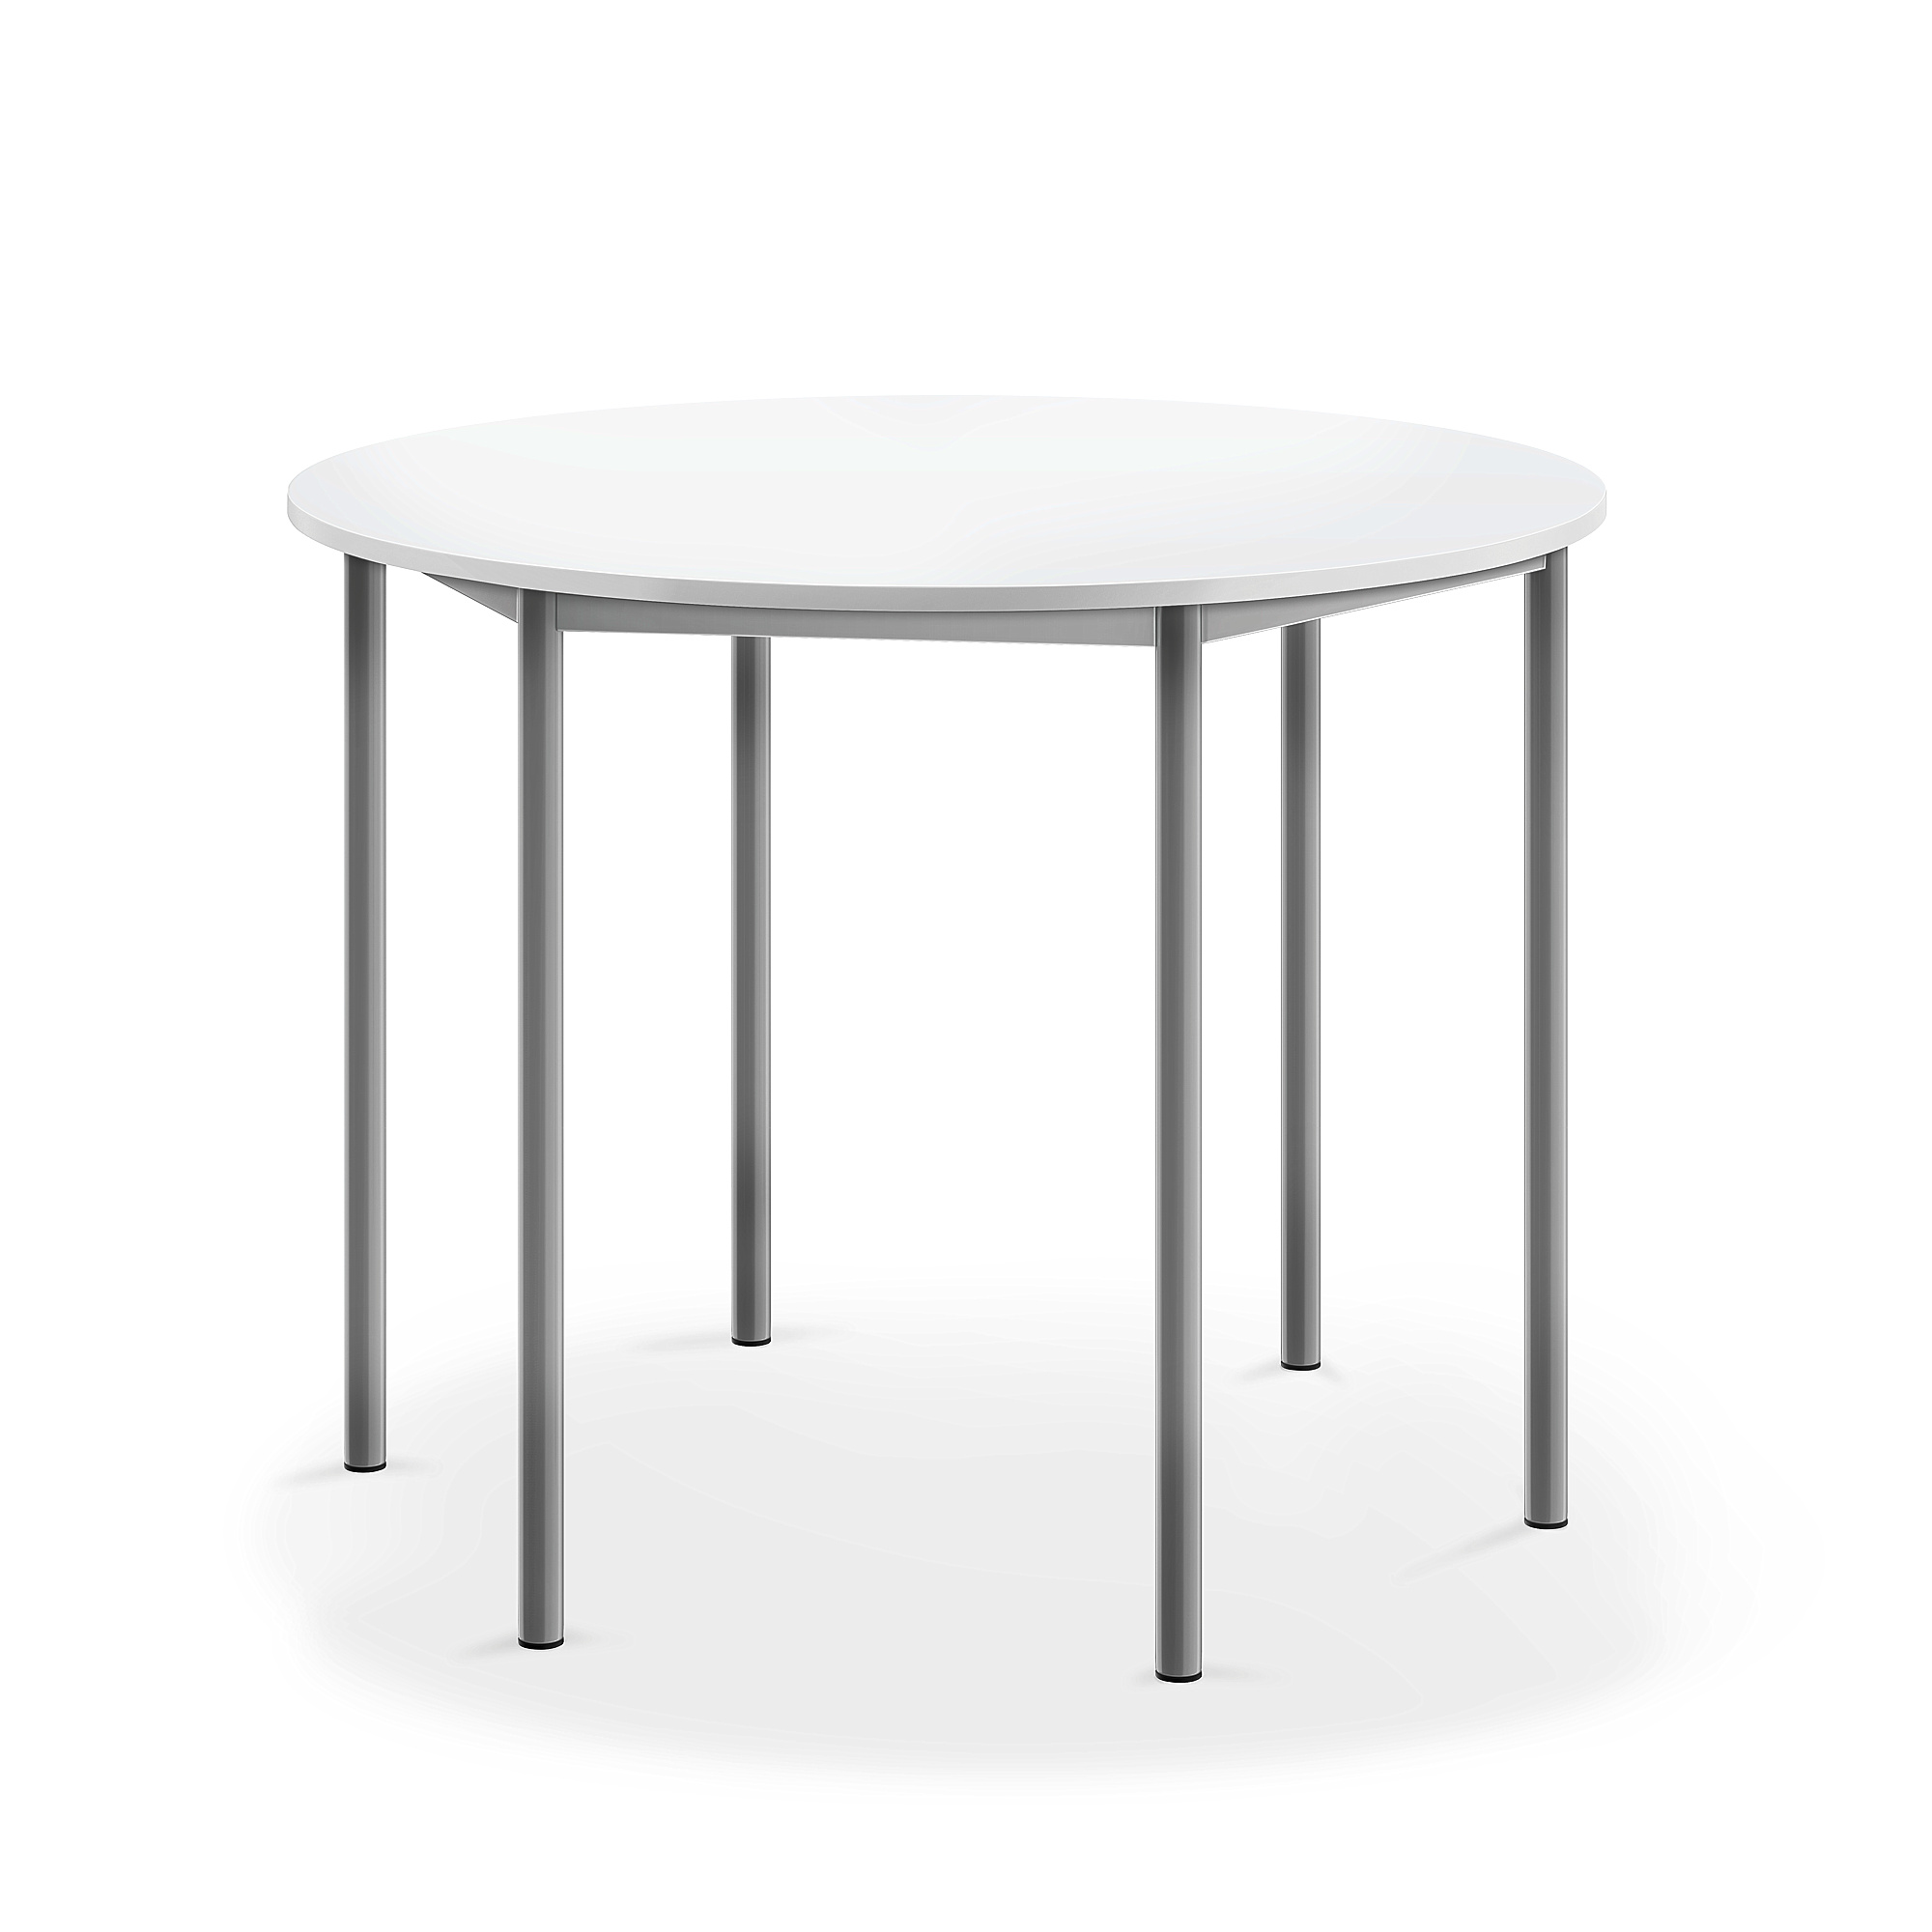 Stůl BORÅS, Ø1200x900 mm, stříbrné nohy, HPL deska, bílá